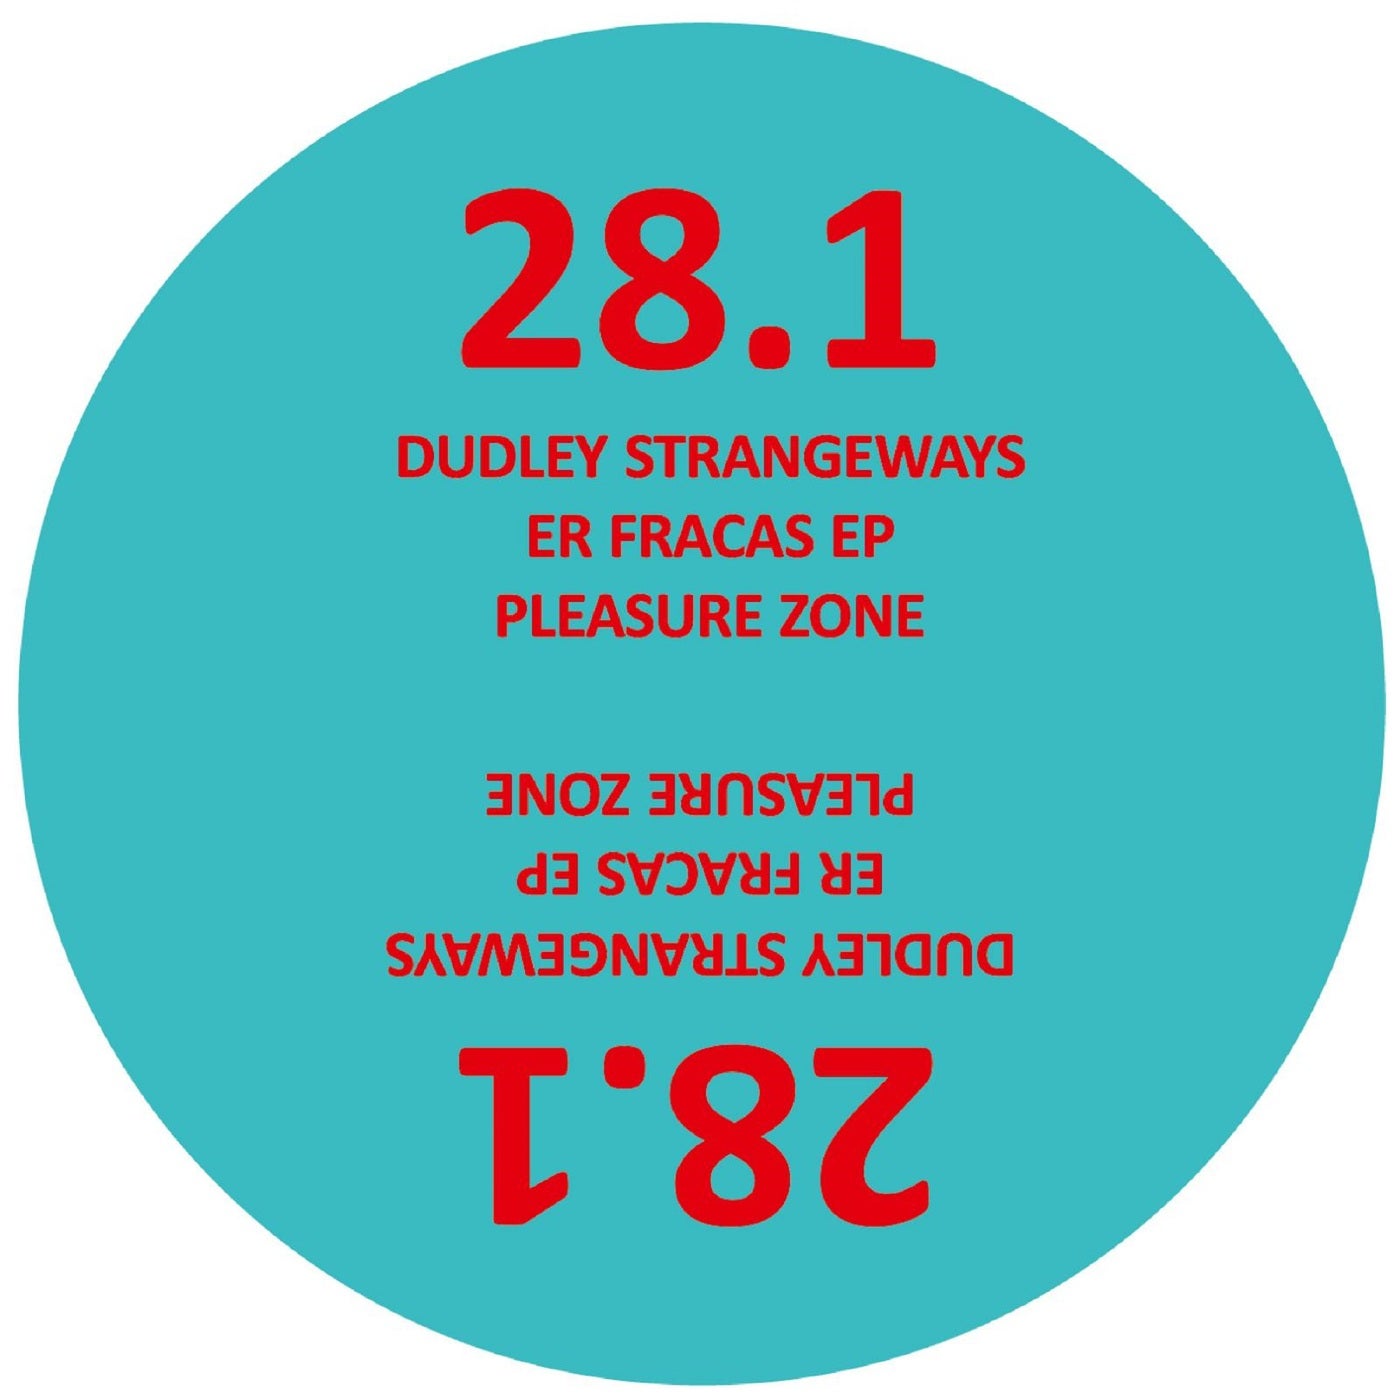 Dudley Strangeways – Er Fracas EP [PLZ028POINT1]